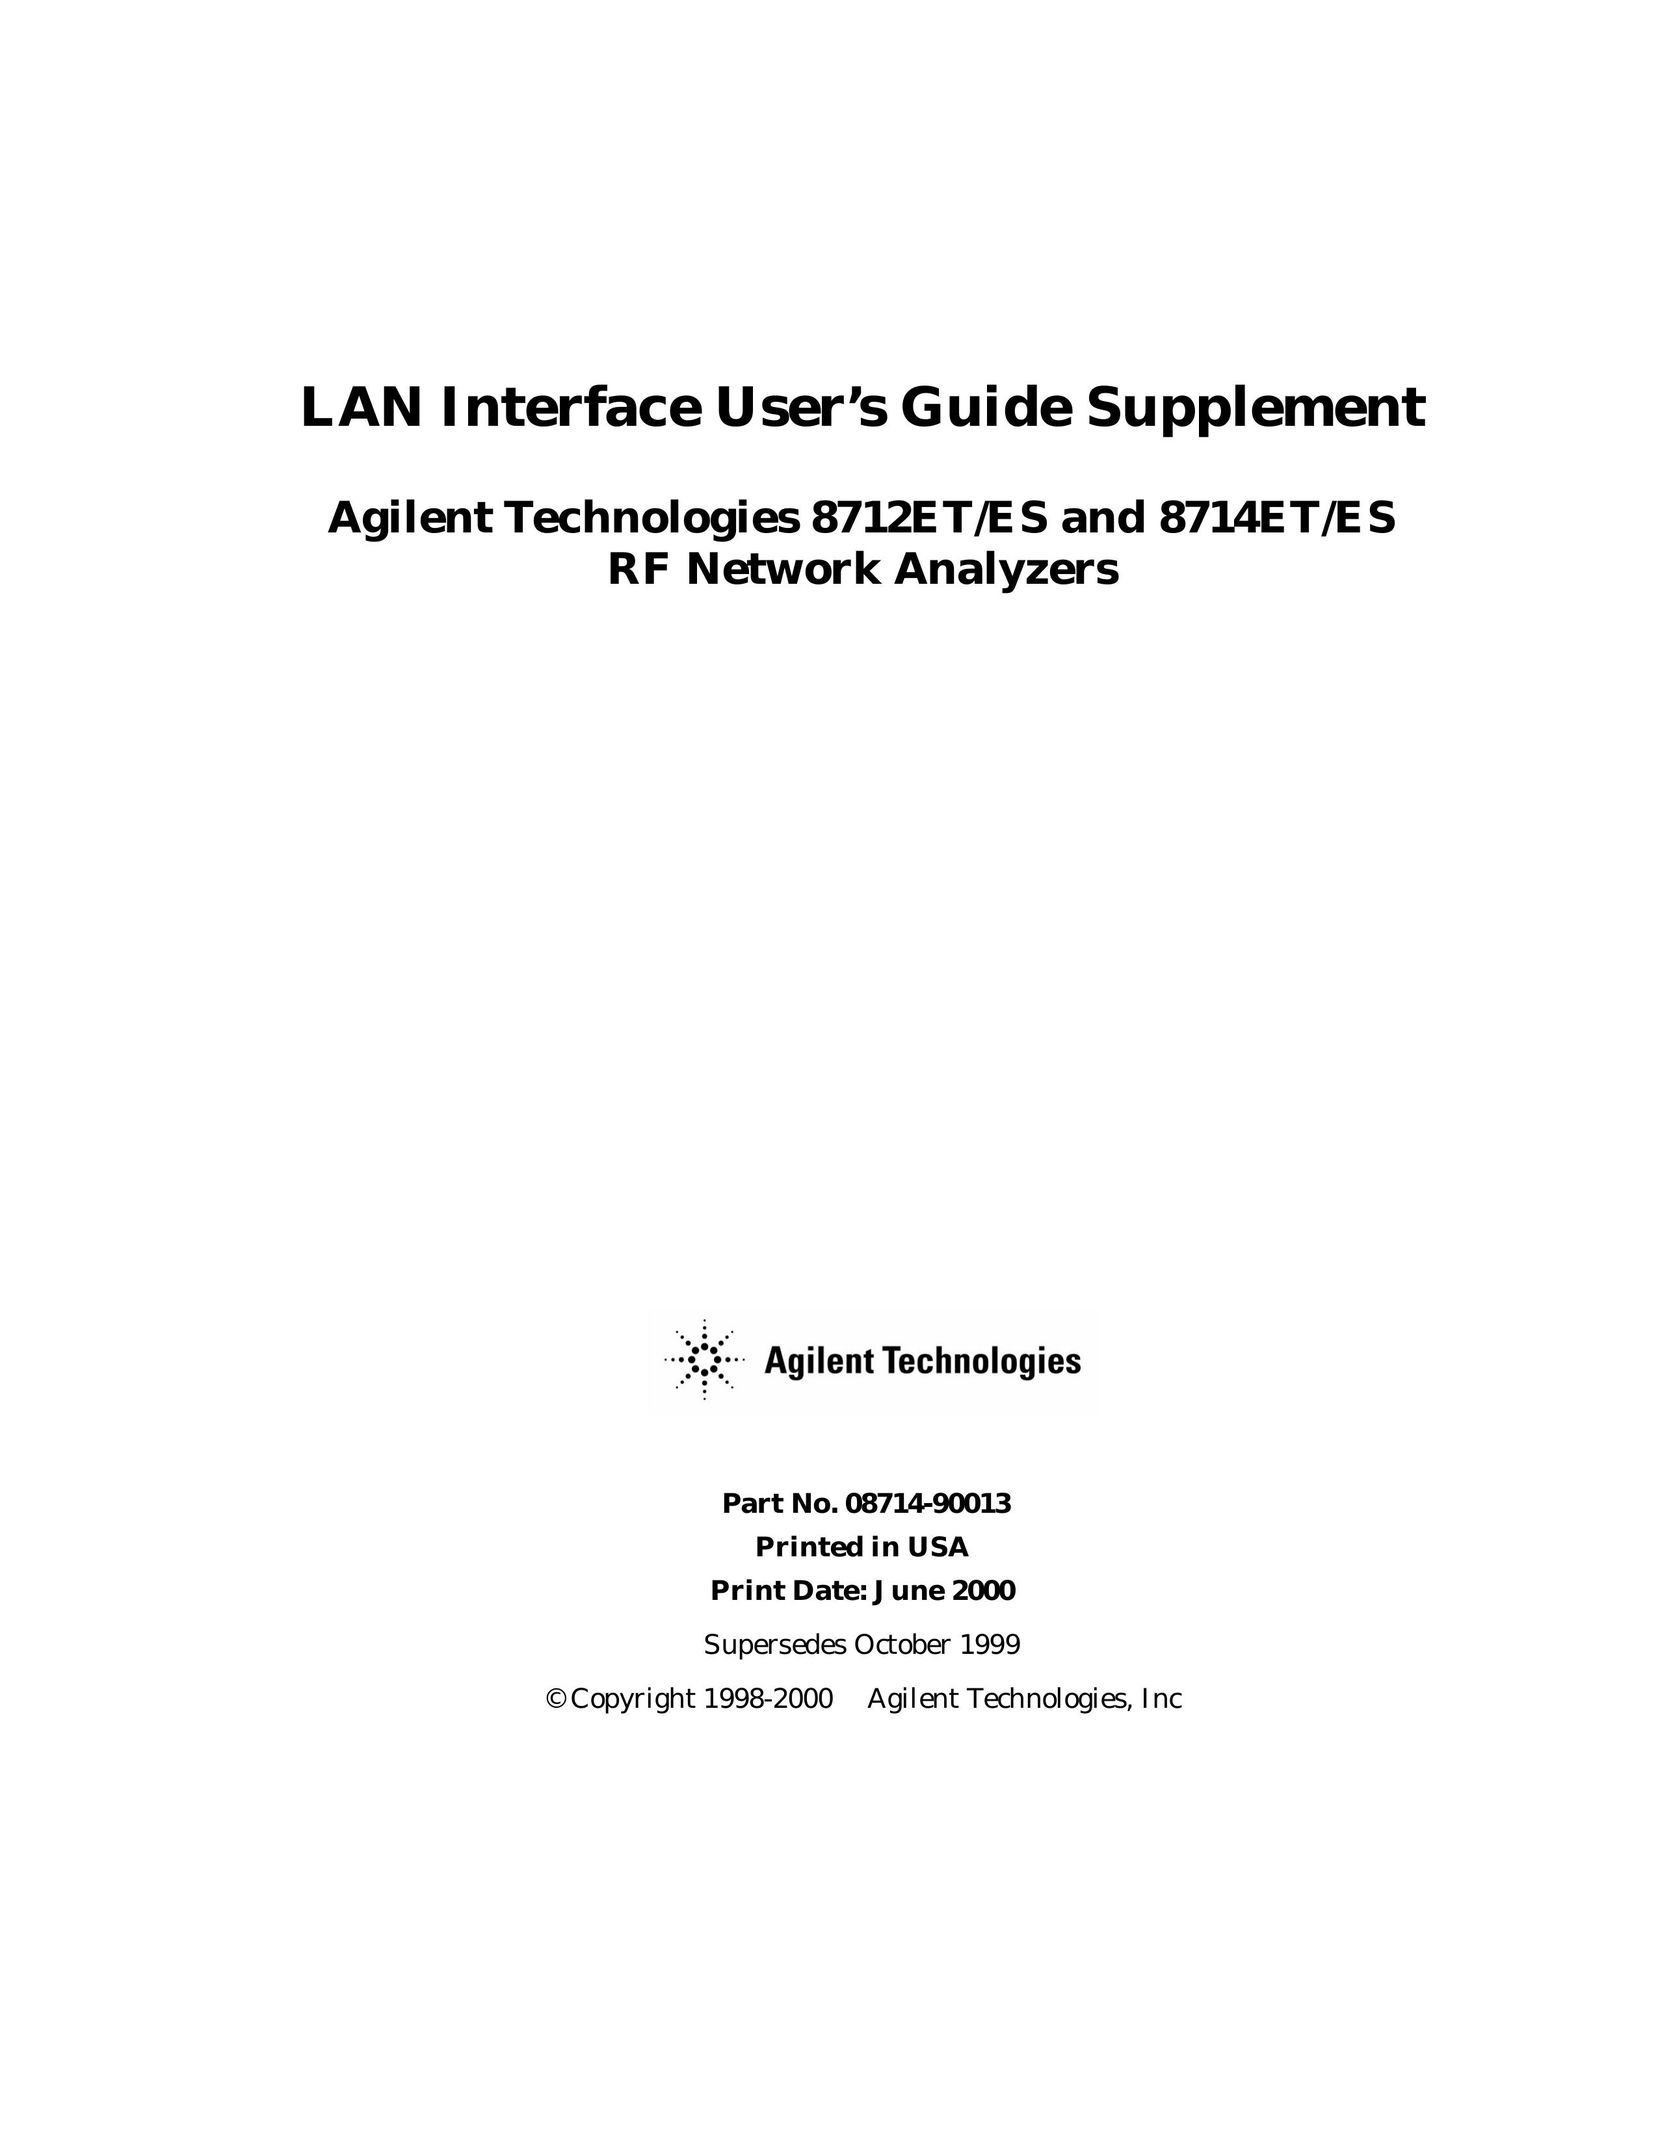 Agilent Technologies 8714ET Switch User Manual